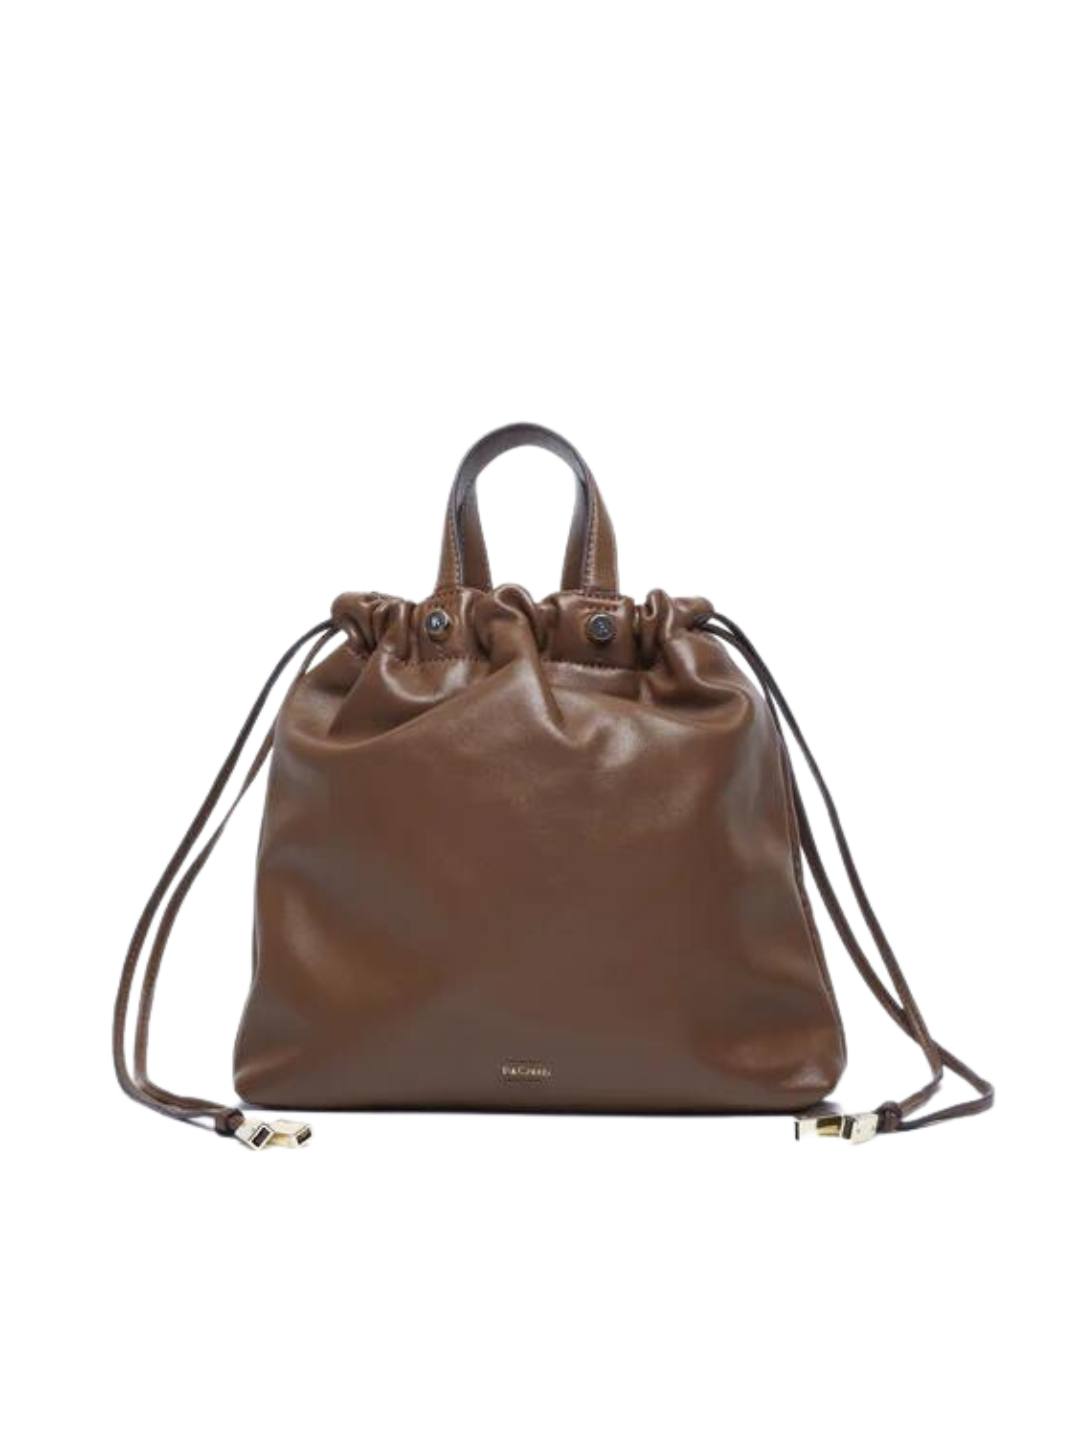 purse stachel backpack for women female handbag trendy cute accessories leather